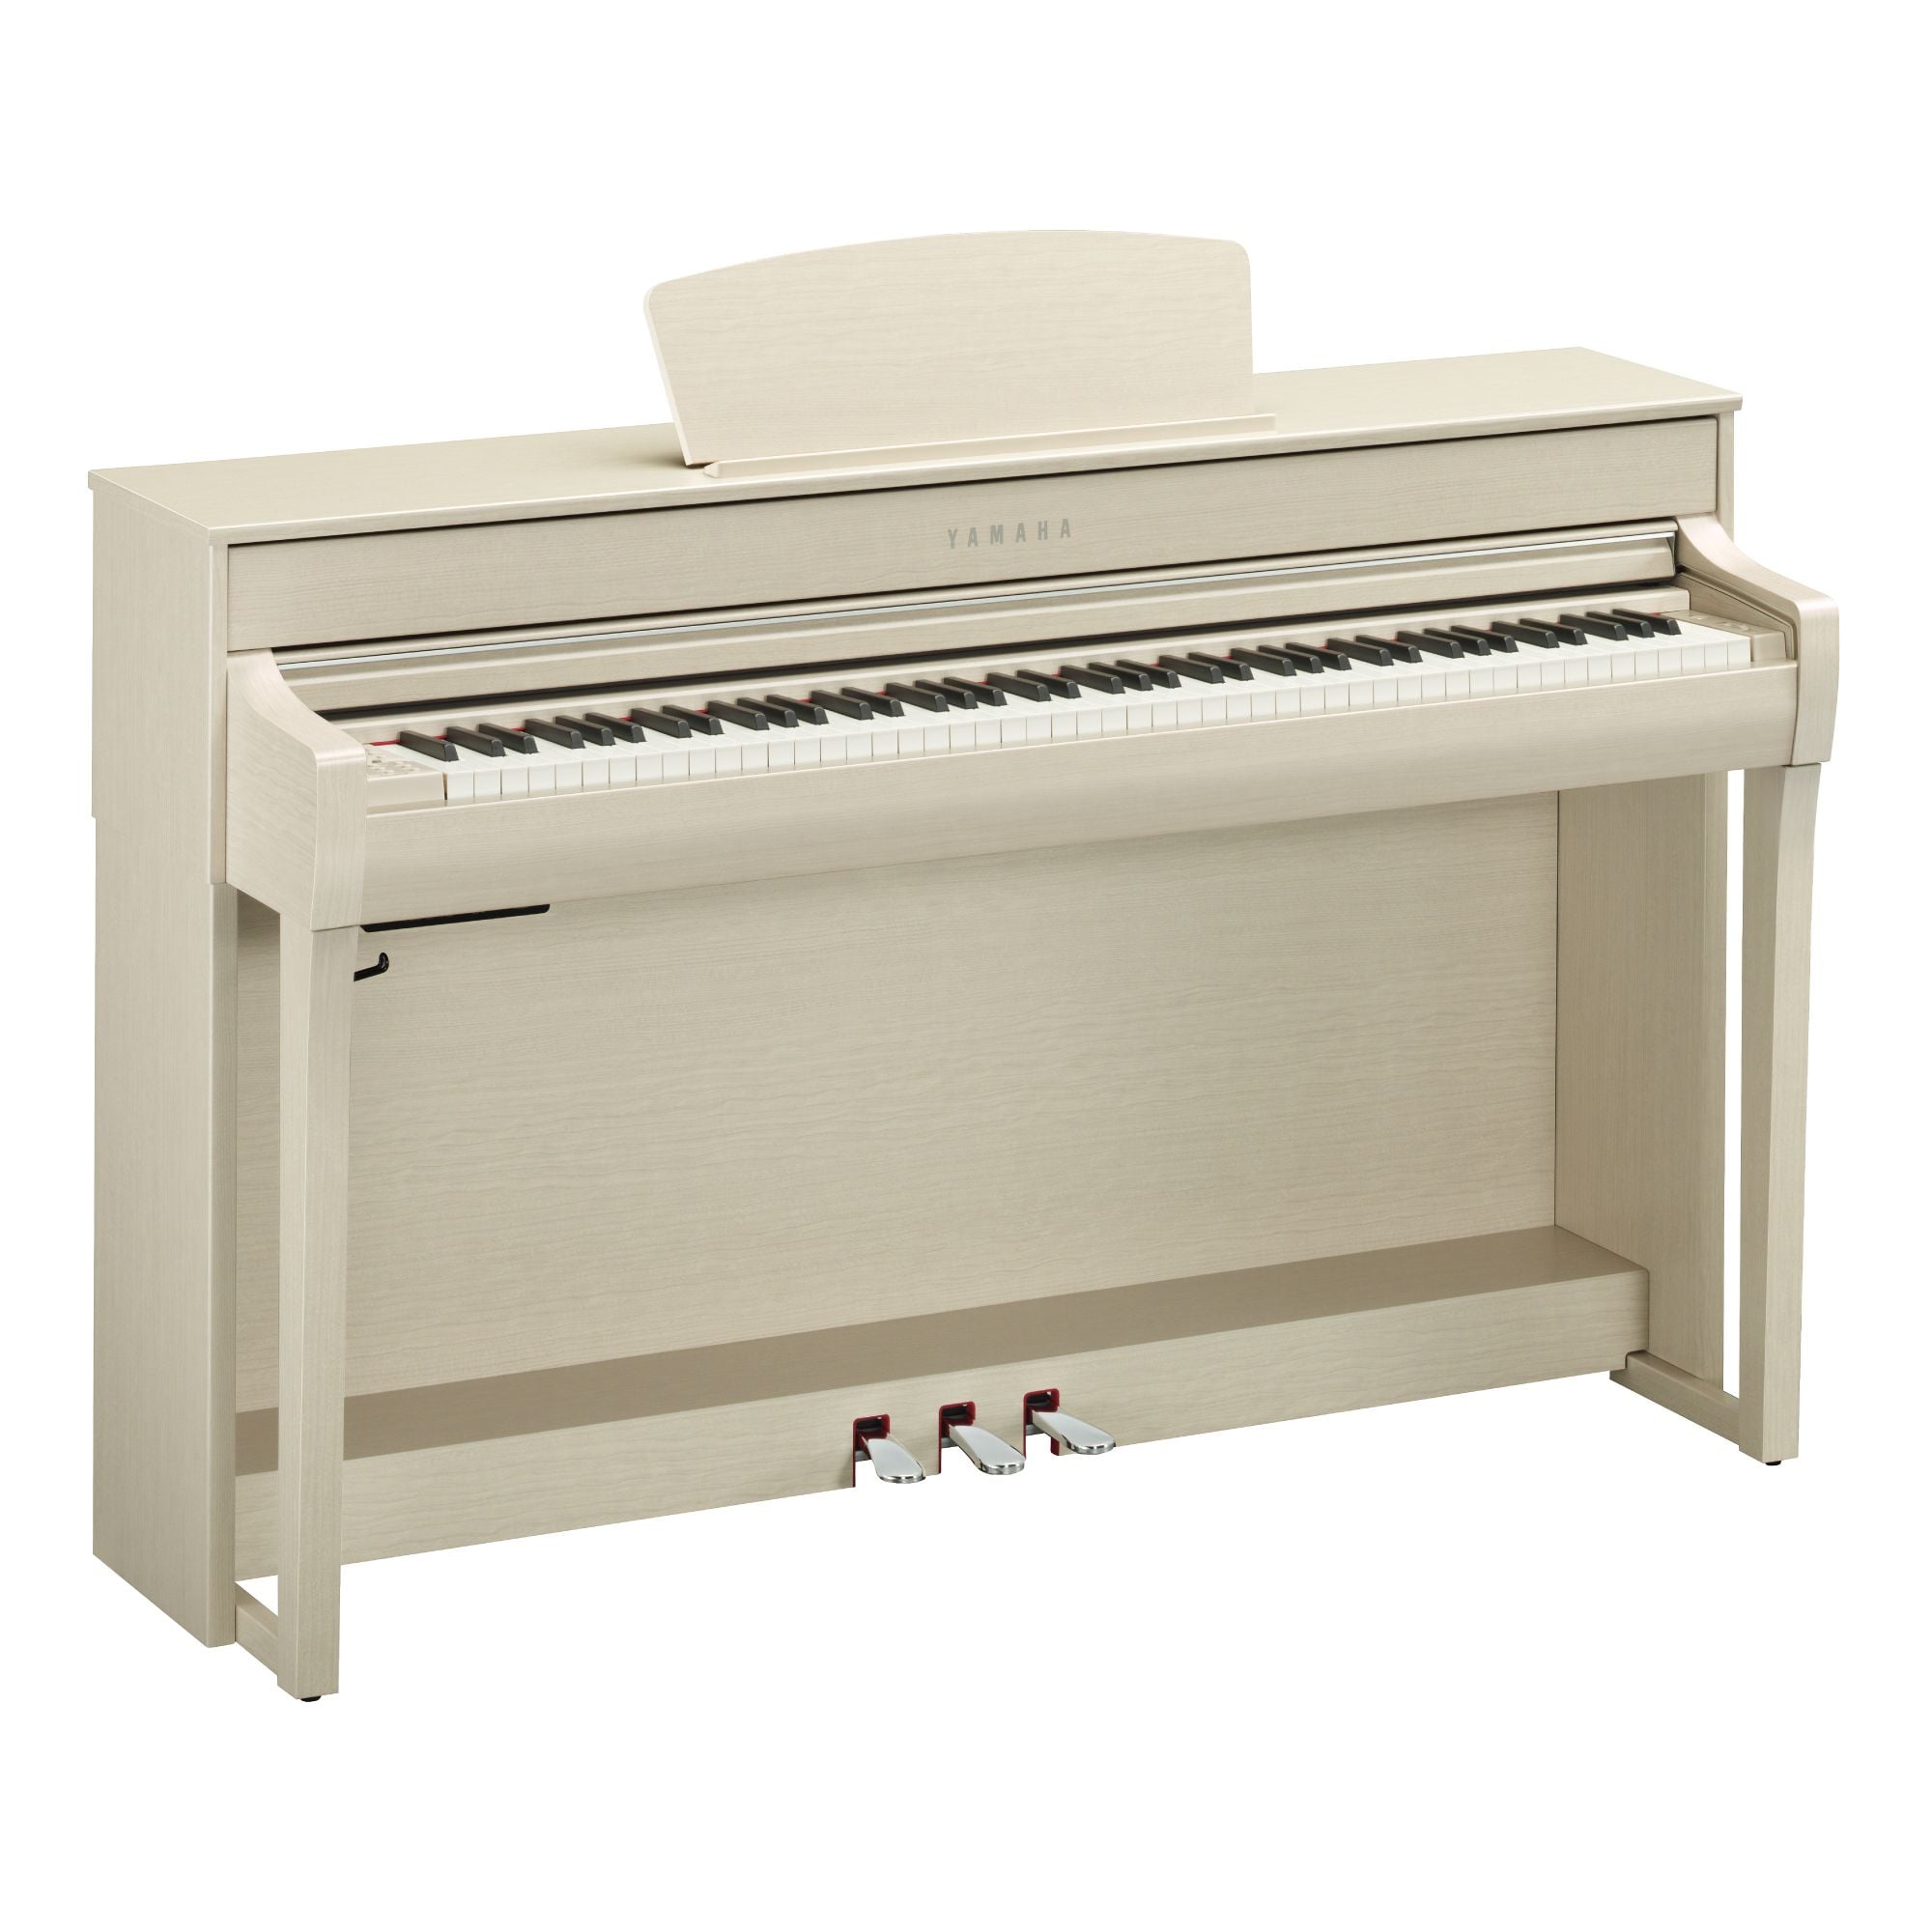 CLP-735 - Overview - Clavinova - Pianos - Musical Instruments 